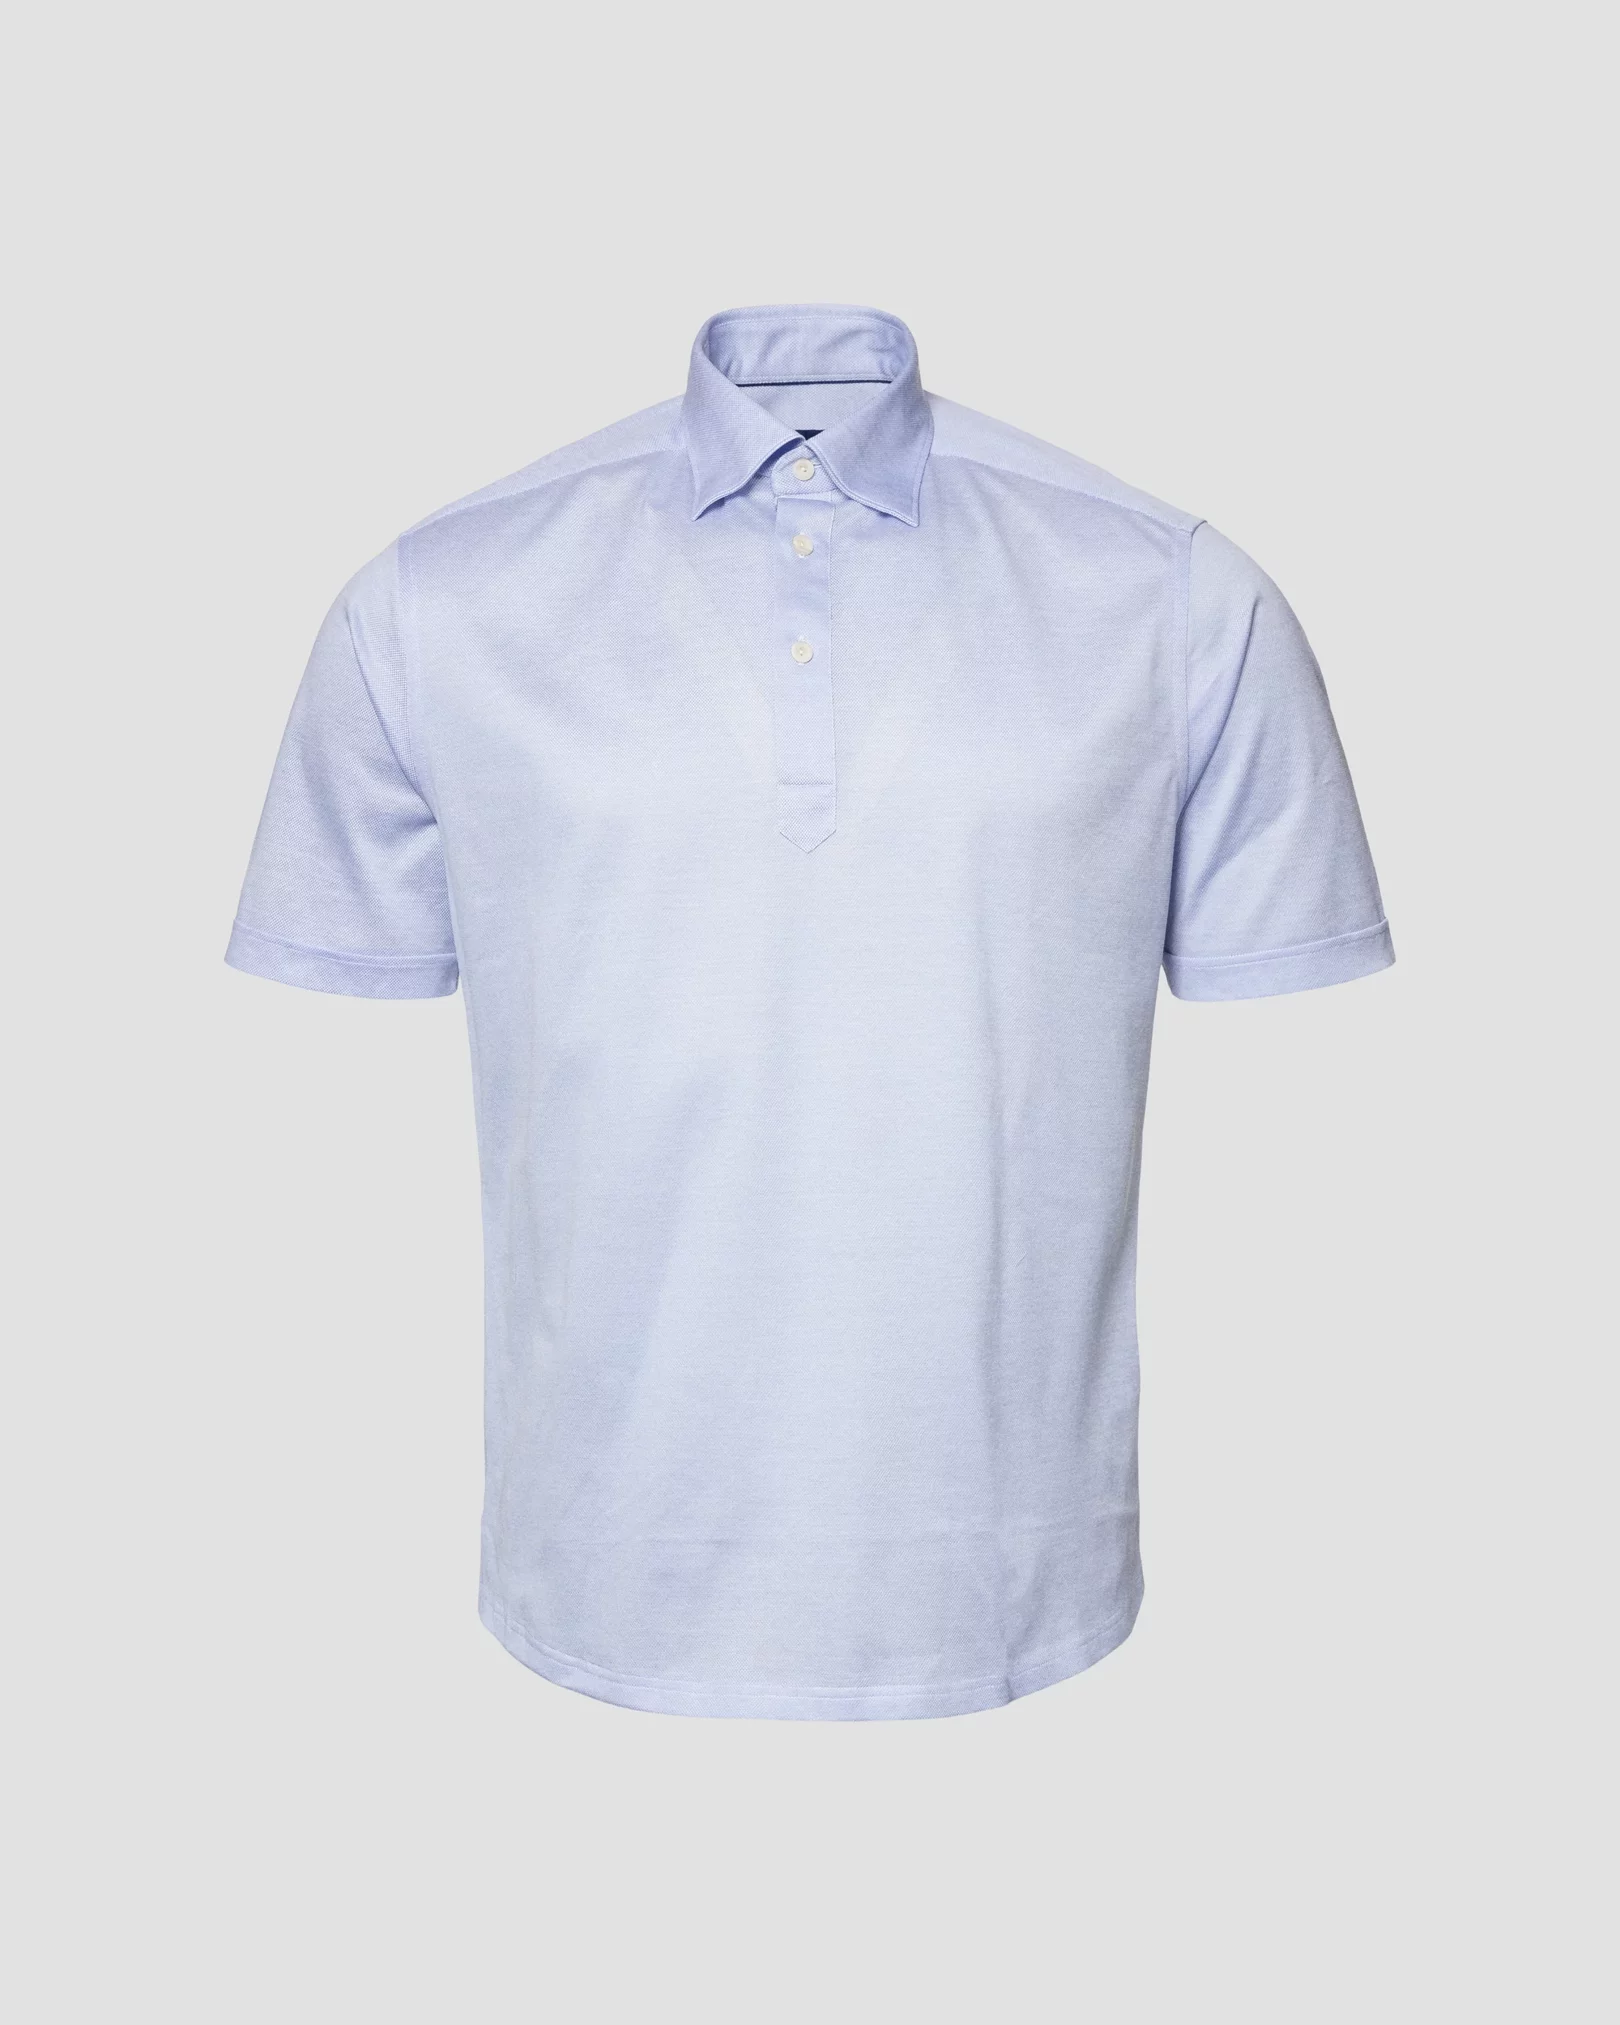 Lakeland Leather Short Sleeve Cotton Pique Polo Shirt in Denim Blue